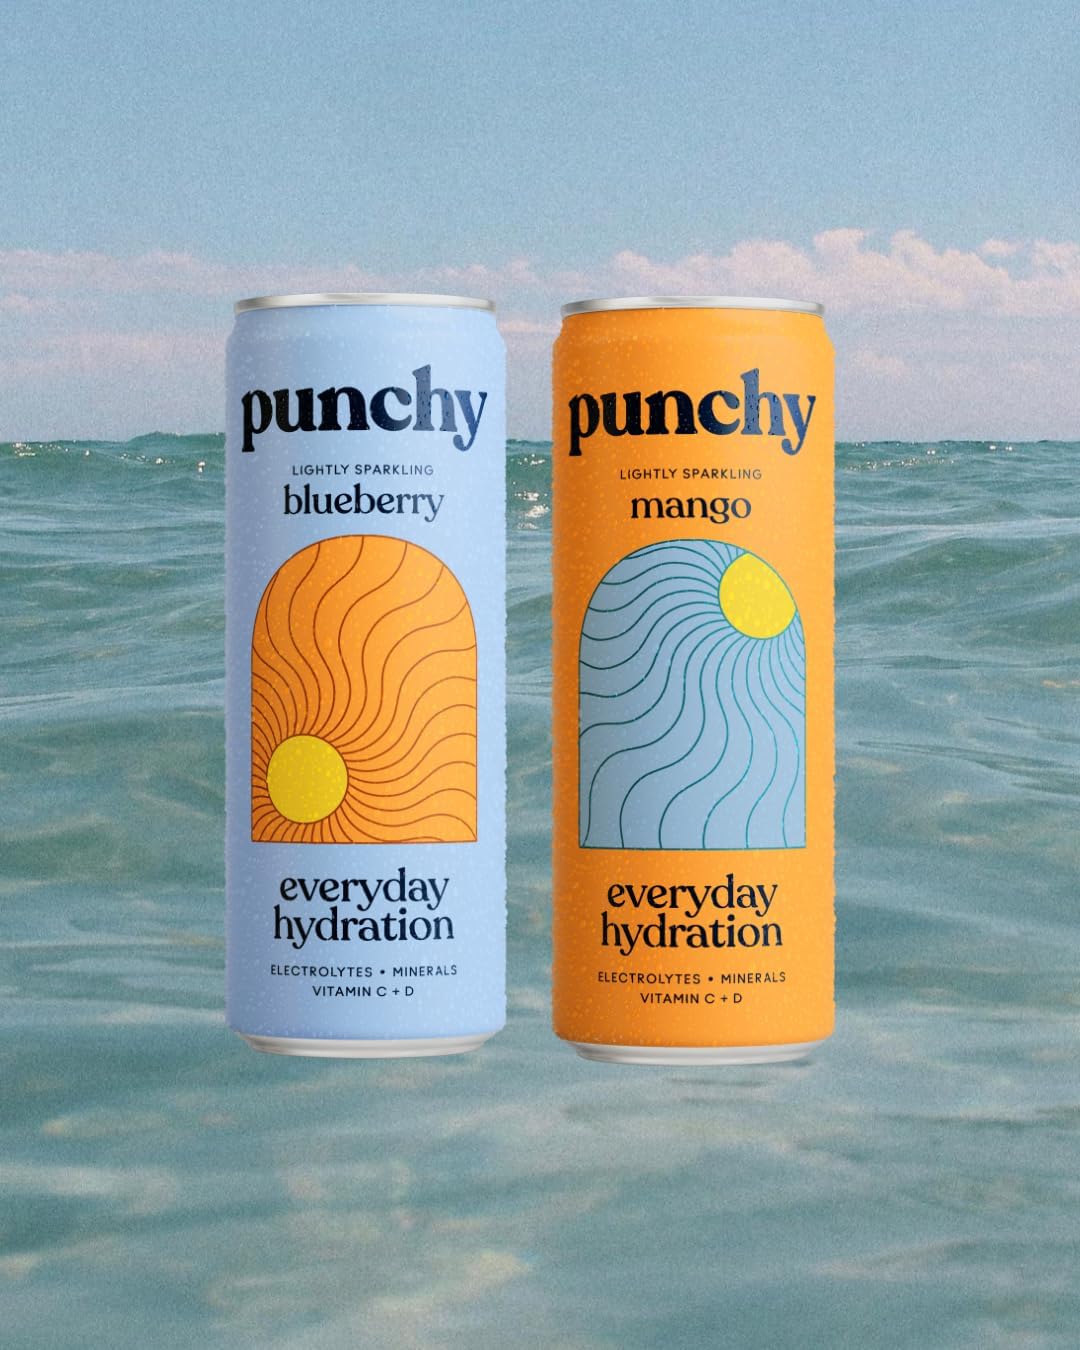 Punchy - Everyday Hydration Mango